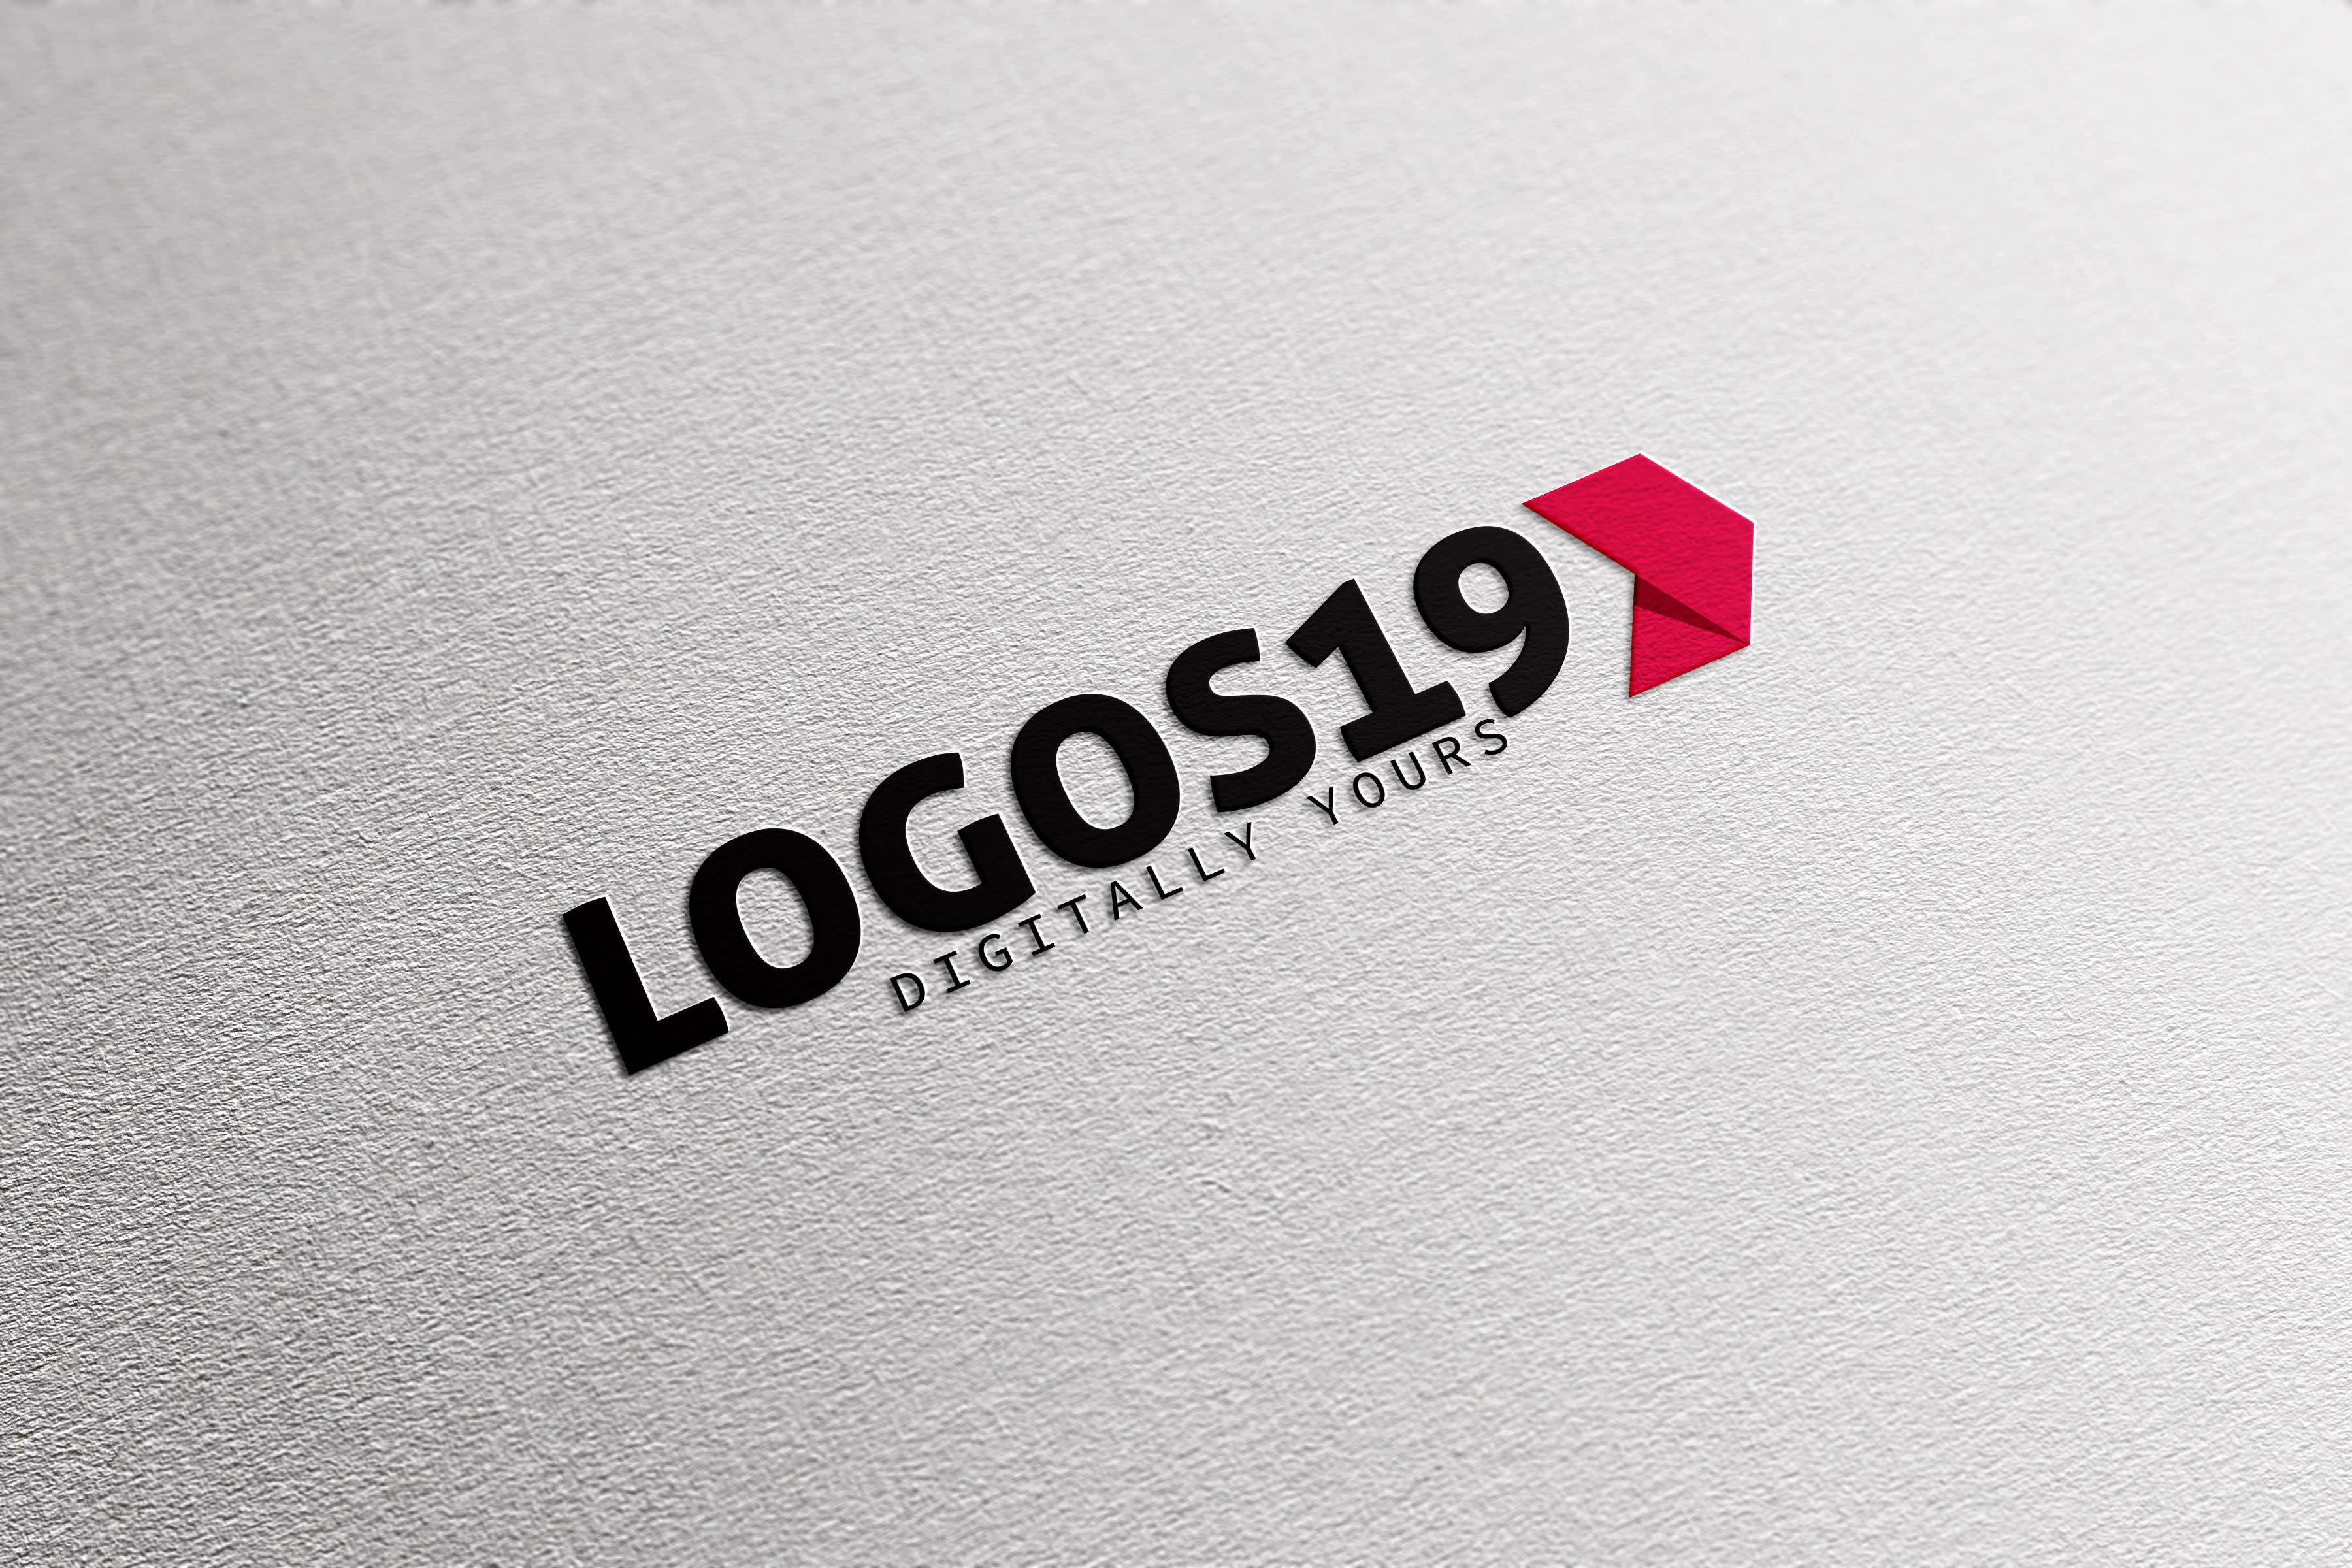 Imaginative Logos - 15+ Best Imaginative Logo Ideas. Free Imaginative Logo  Maker. | 99designs